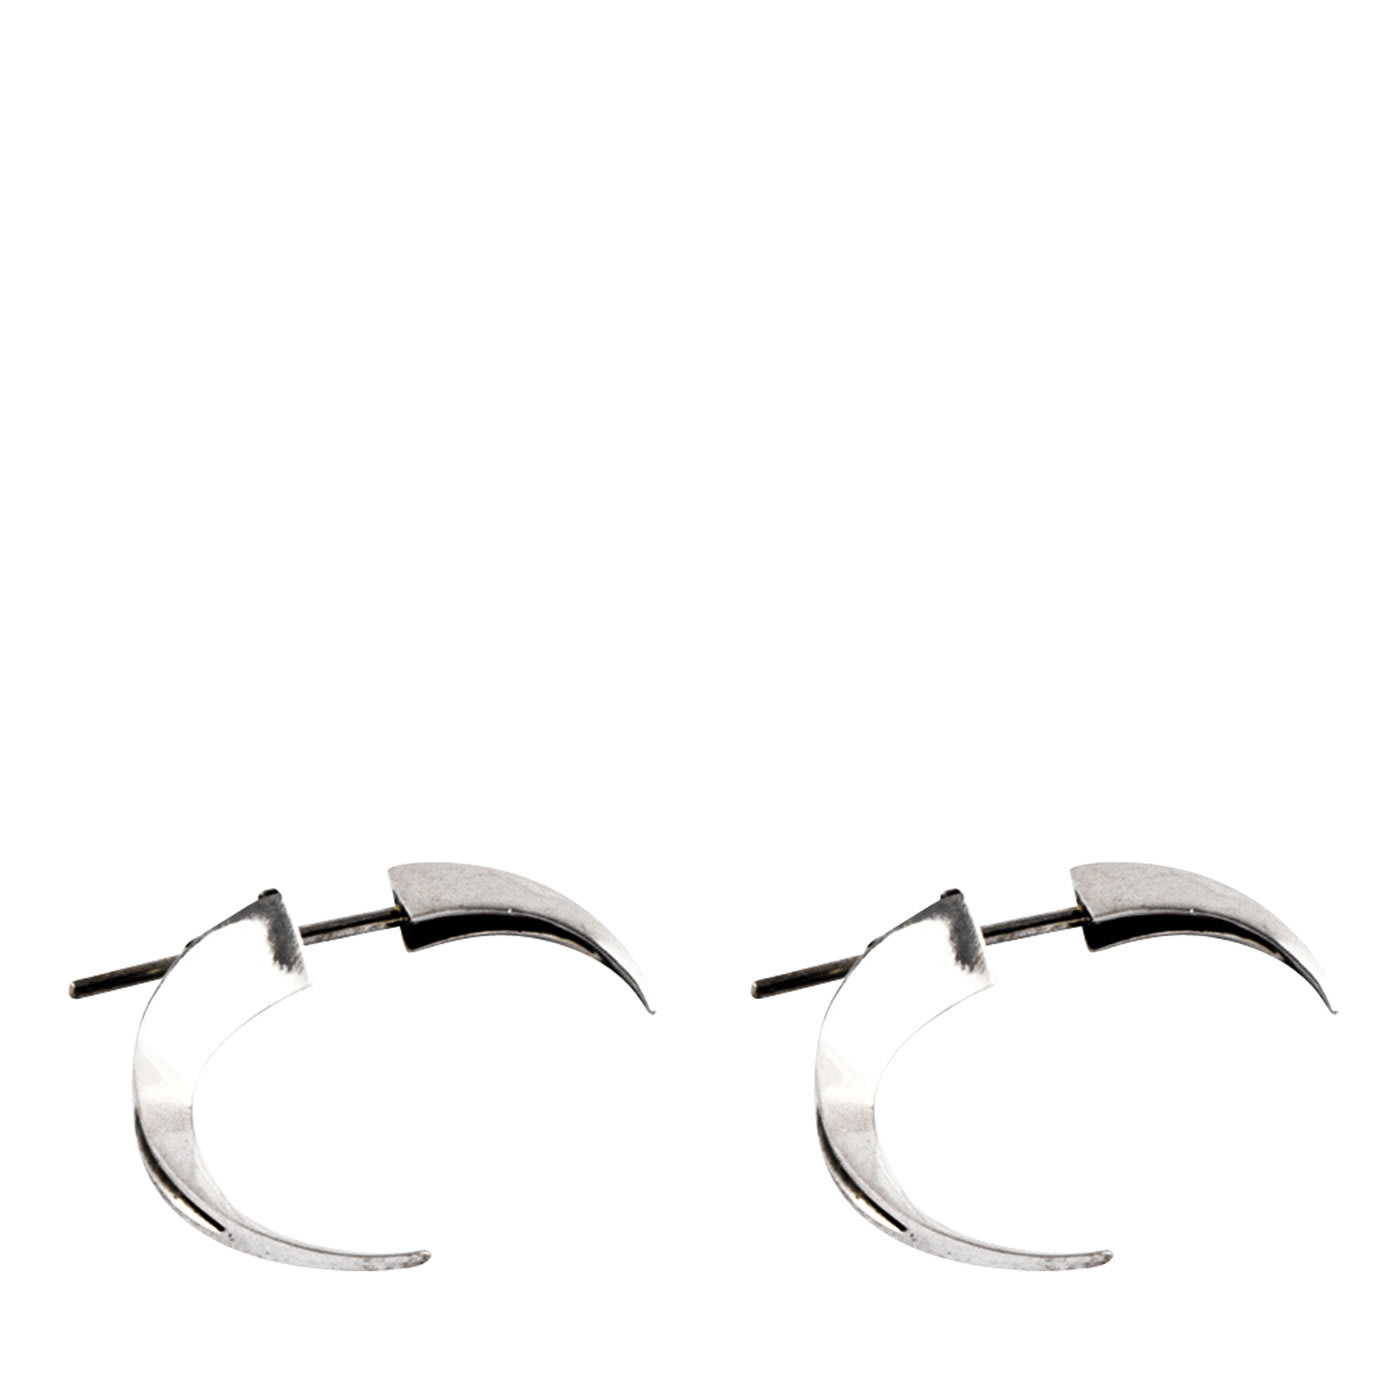 Uncini Silver Earrings - Paola Grande